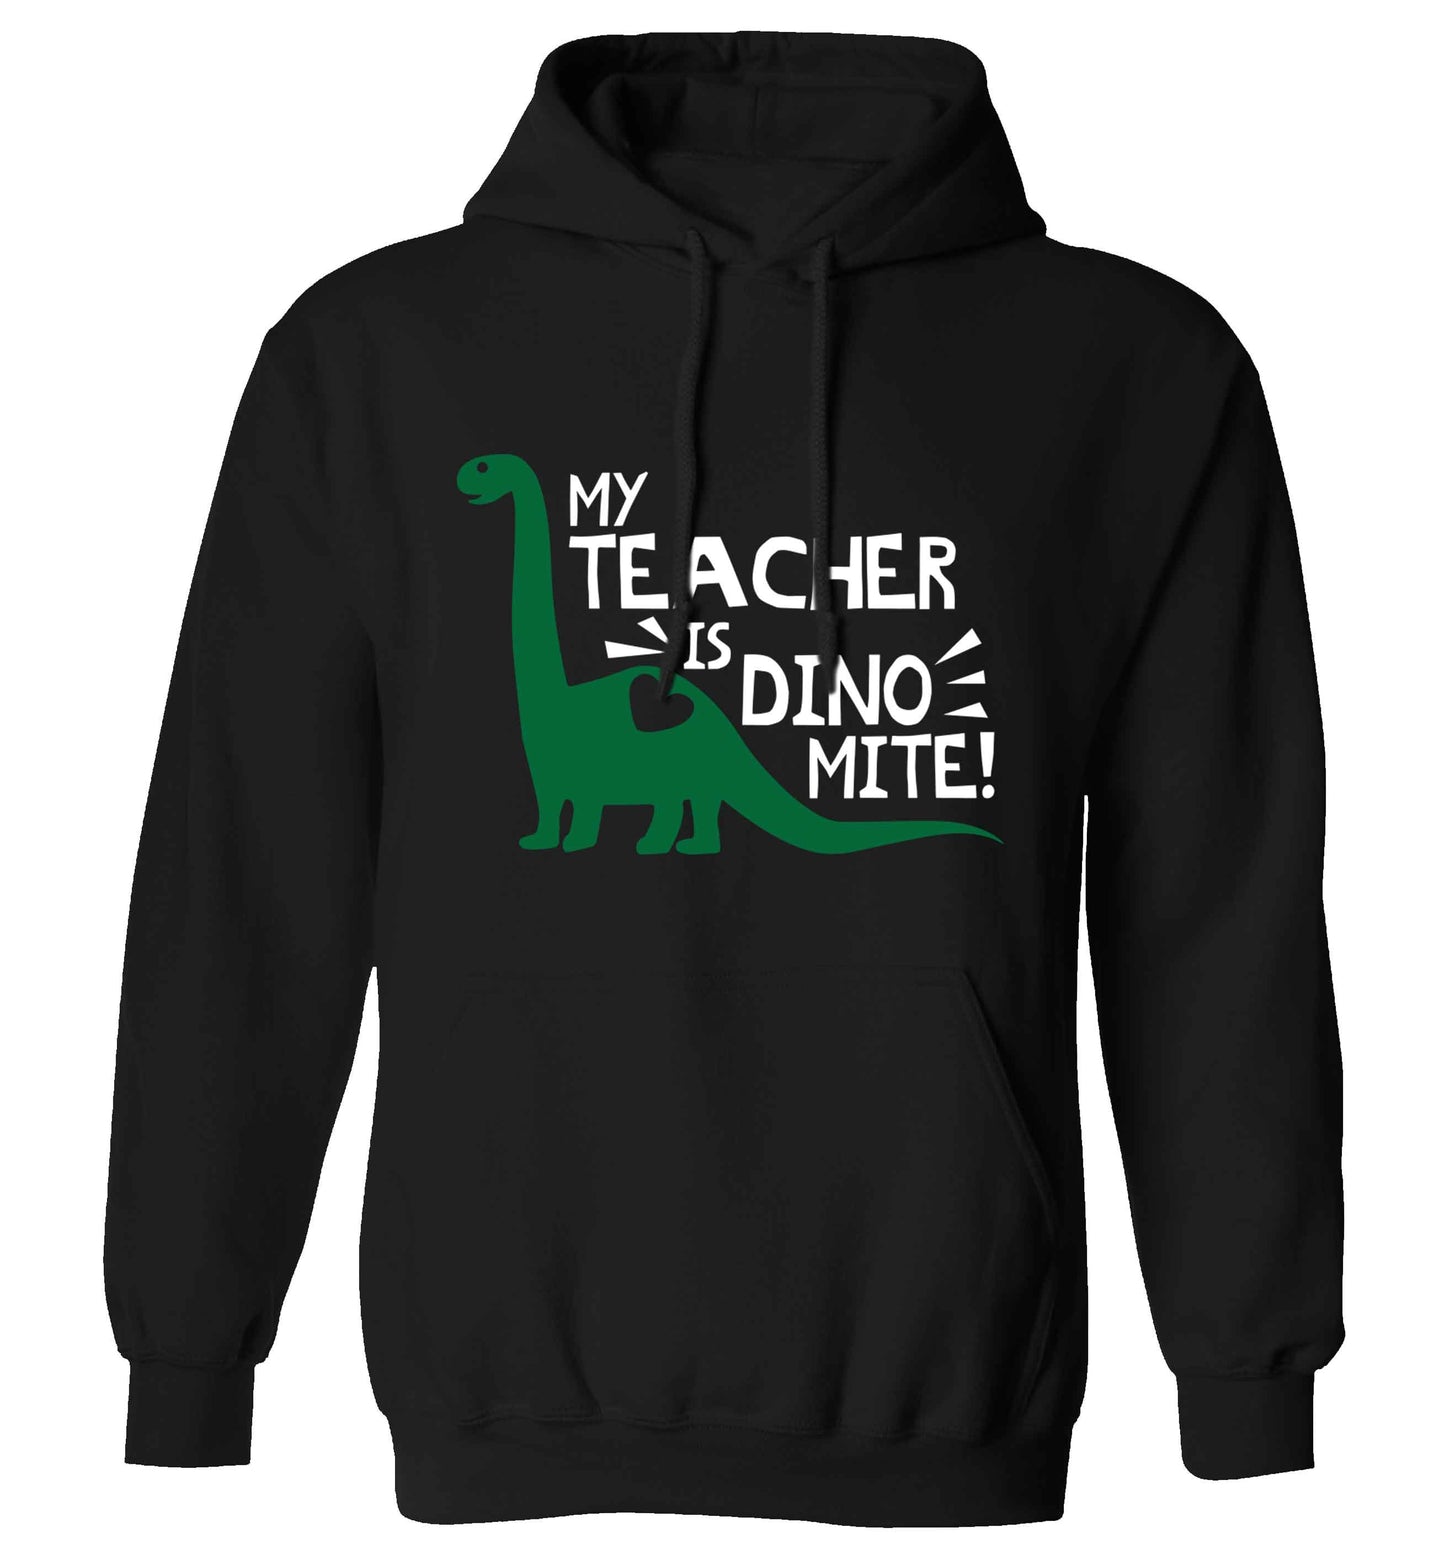 My teacher is dinomite! adults unisex black hoodie 2XL